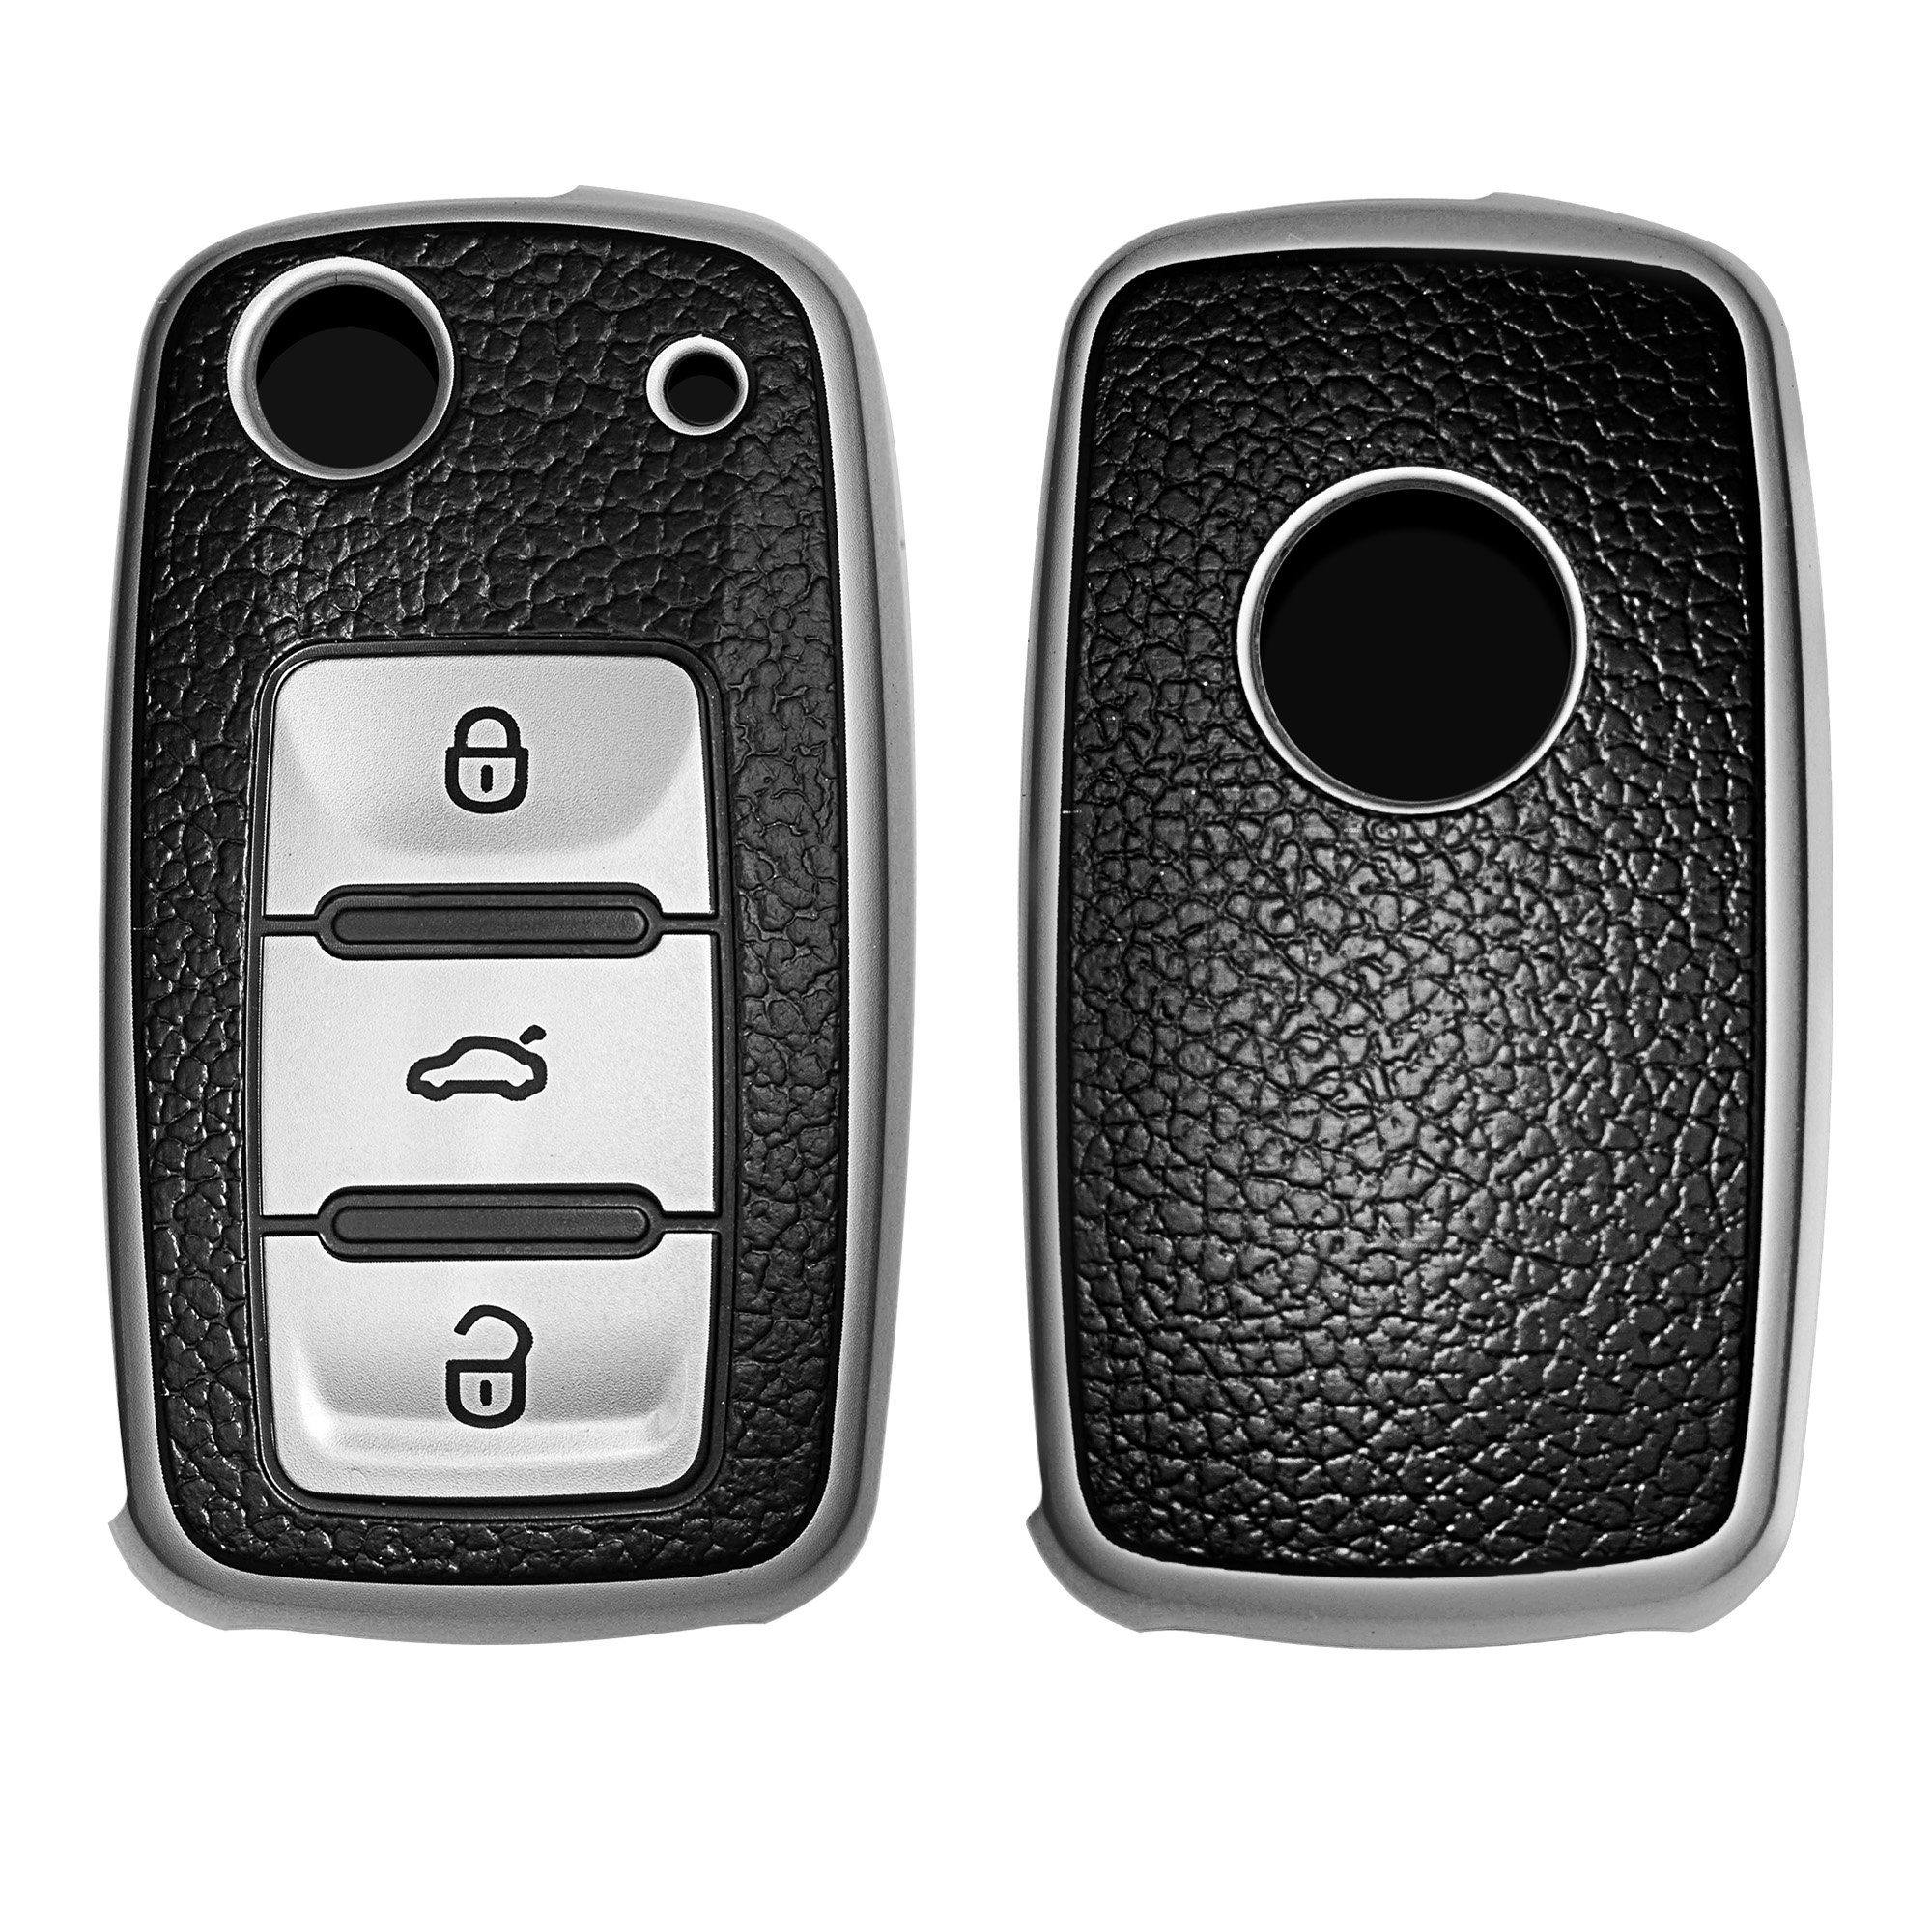 Autoschlüssel Hülle: Schlüsselhülle Cover, TPU Autoschlüssel Hülle, 4  Tasten Autoschlüssel Hülle Kompatibel mit Renault, Schlüsselhülle,  Schlüssel